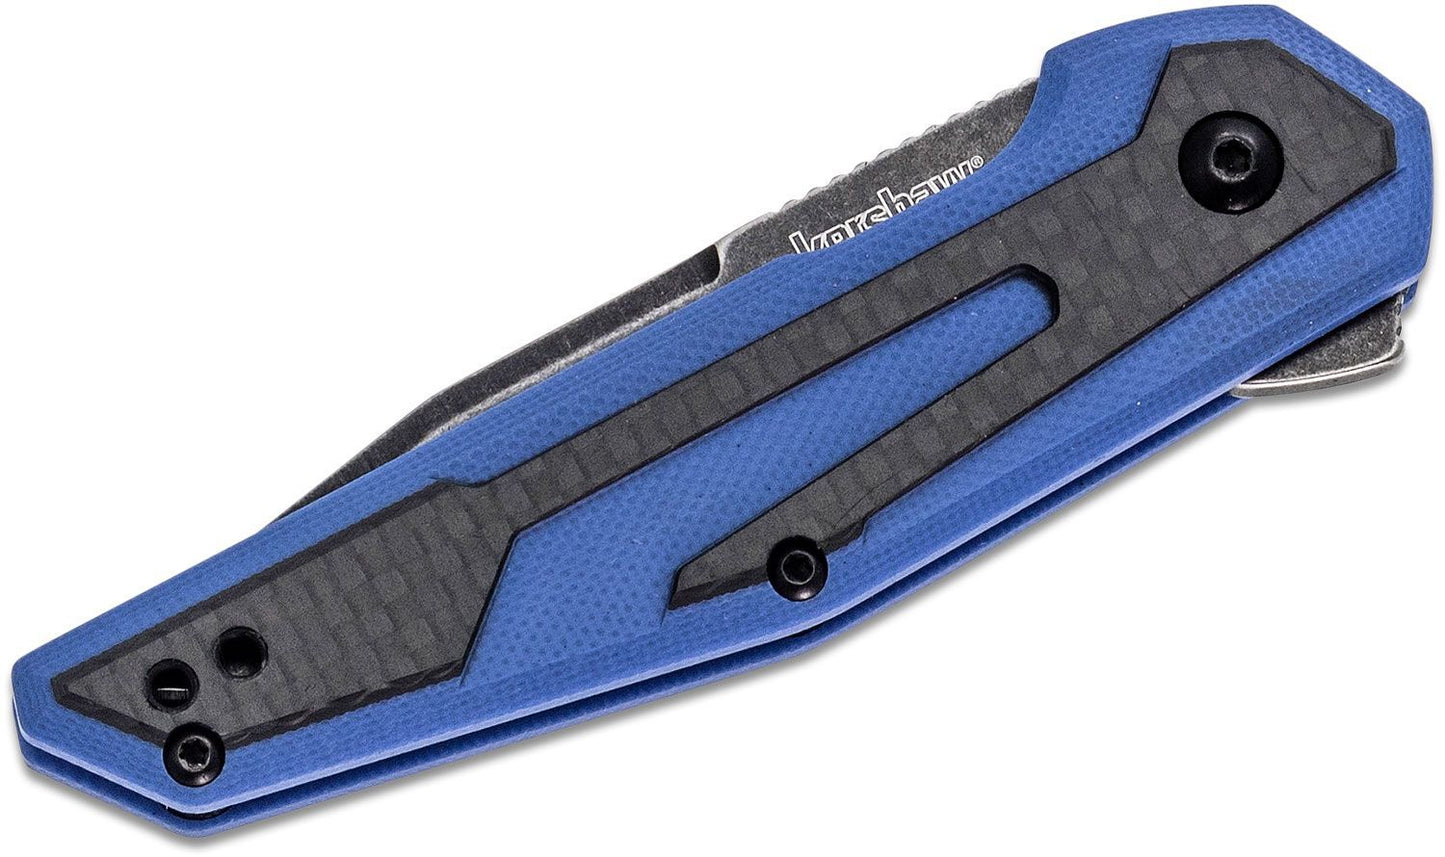 Kershaw Kershaw Tactical Folding Knife 2.75 Inch Blackwashed Clip Point Blade - Blue G10 Handles With Carbon Fiber Overlays #1160Blubw Steel Blue